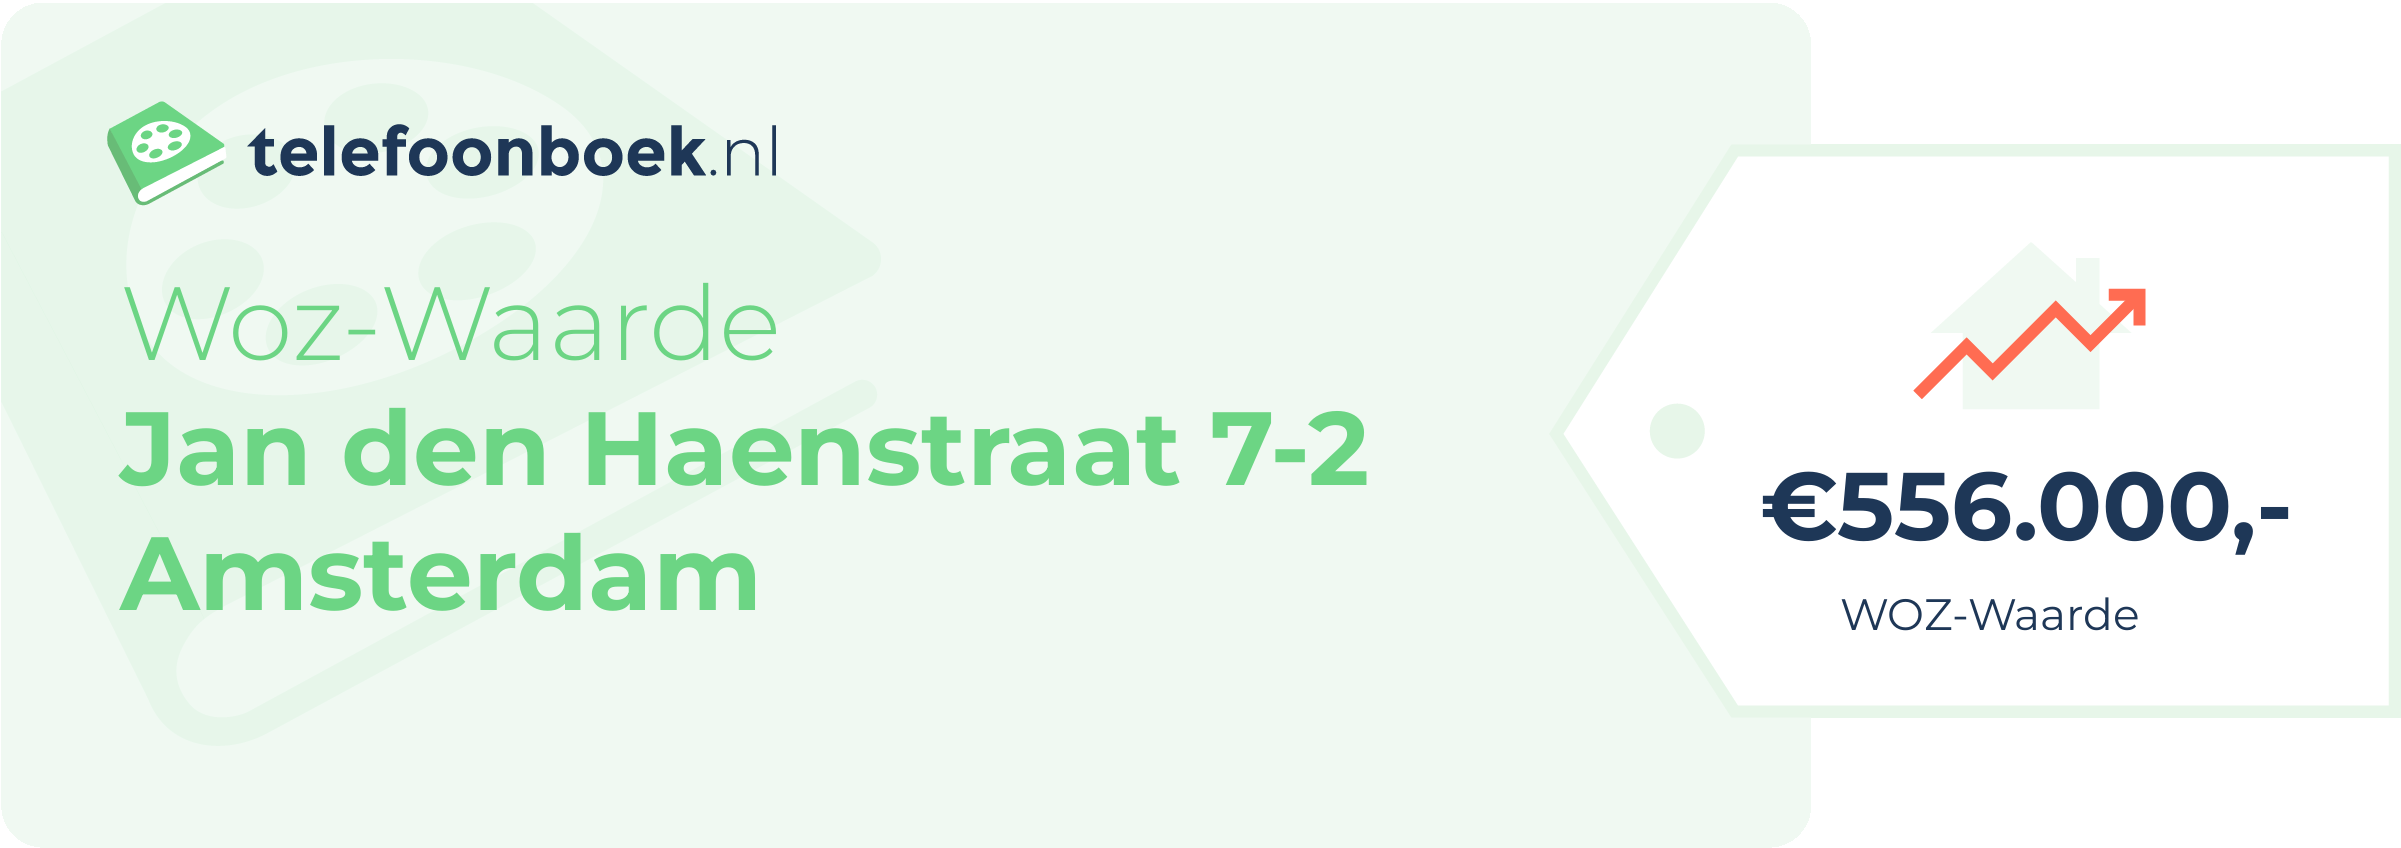 WOZ-waarde Jan Den Haenstraat 7-2 Amsterdam